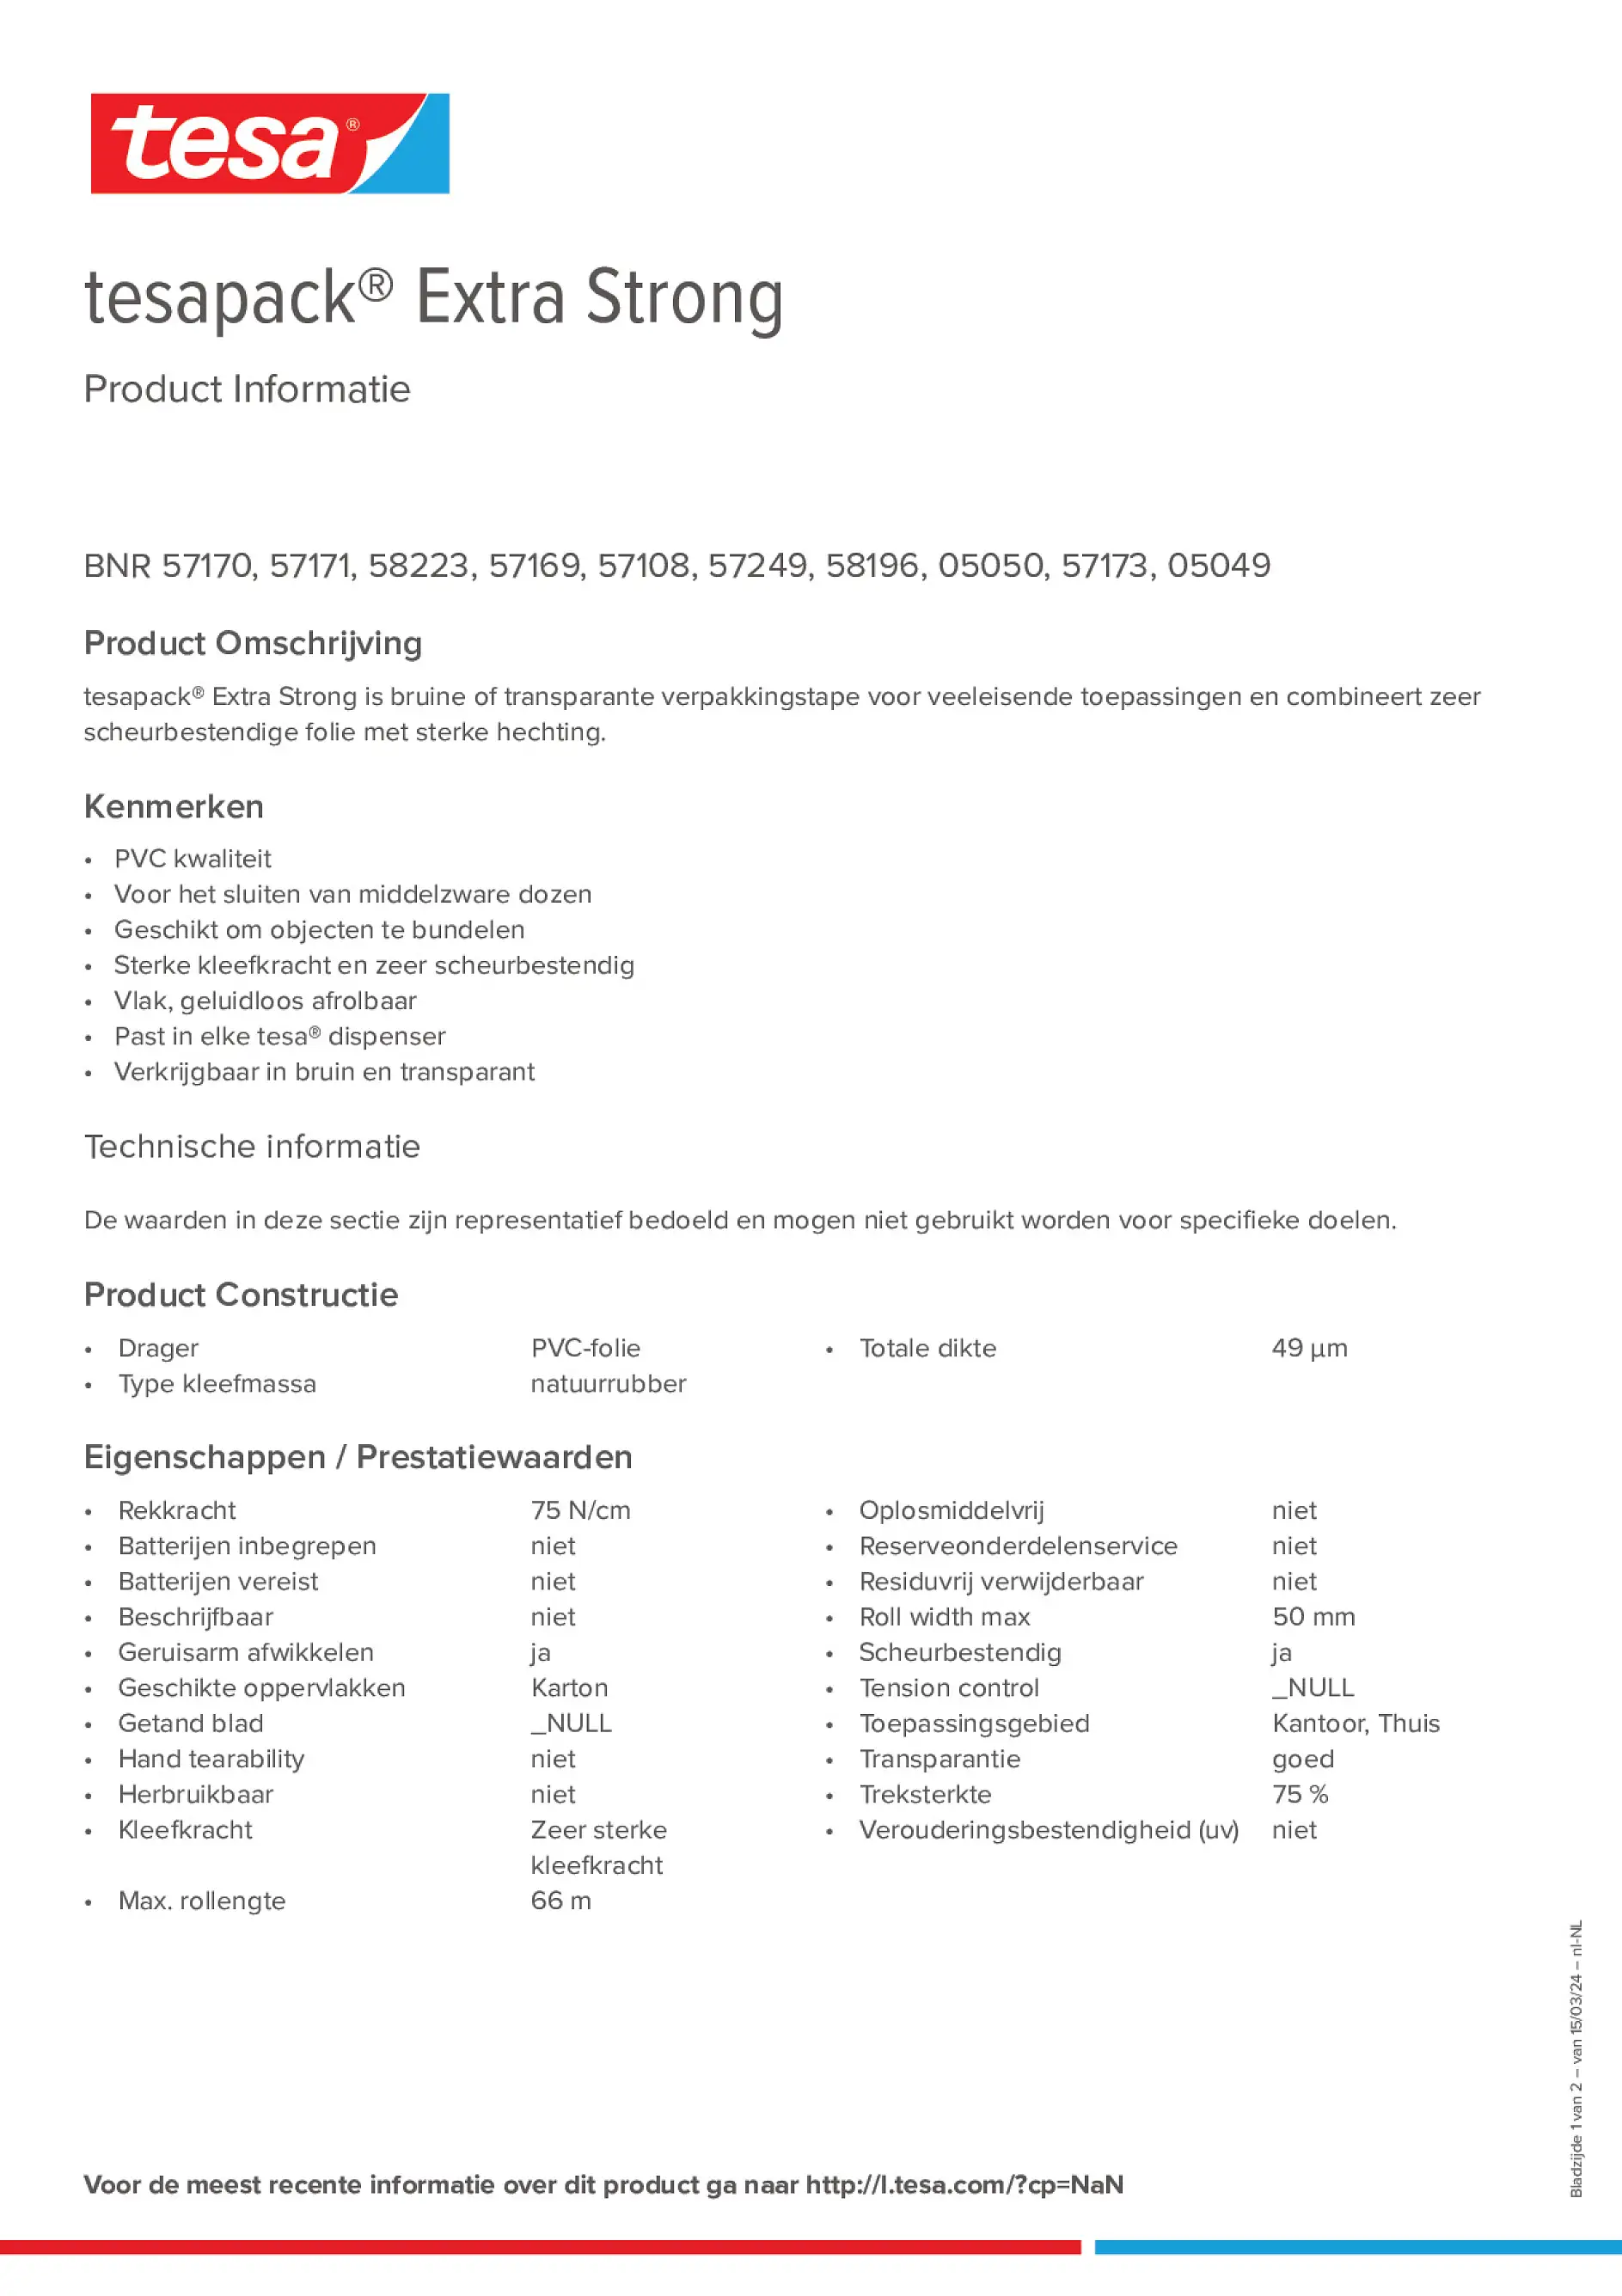 Product information_tesapack® 57249_nl-NL